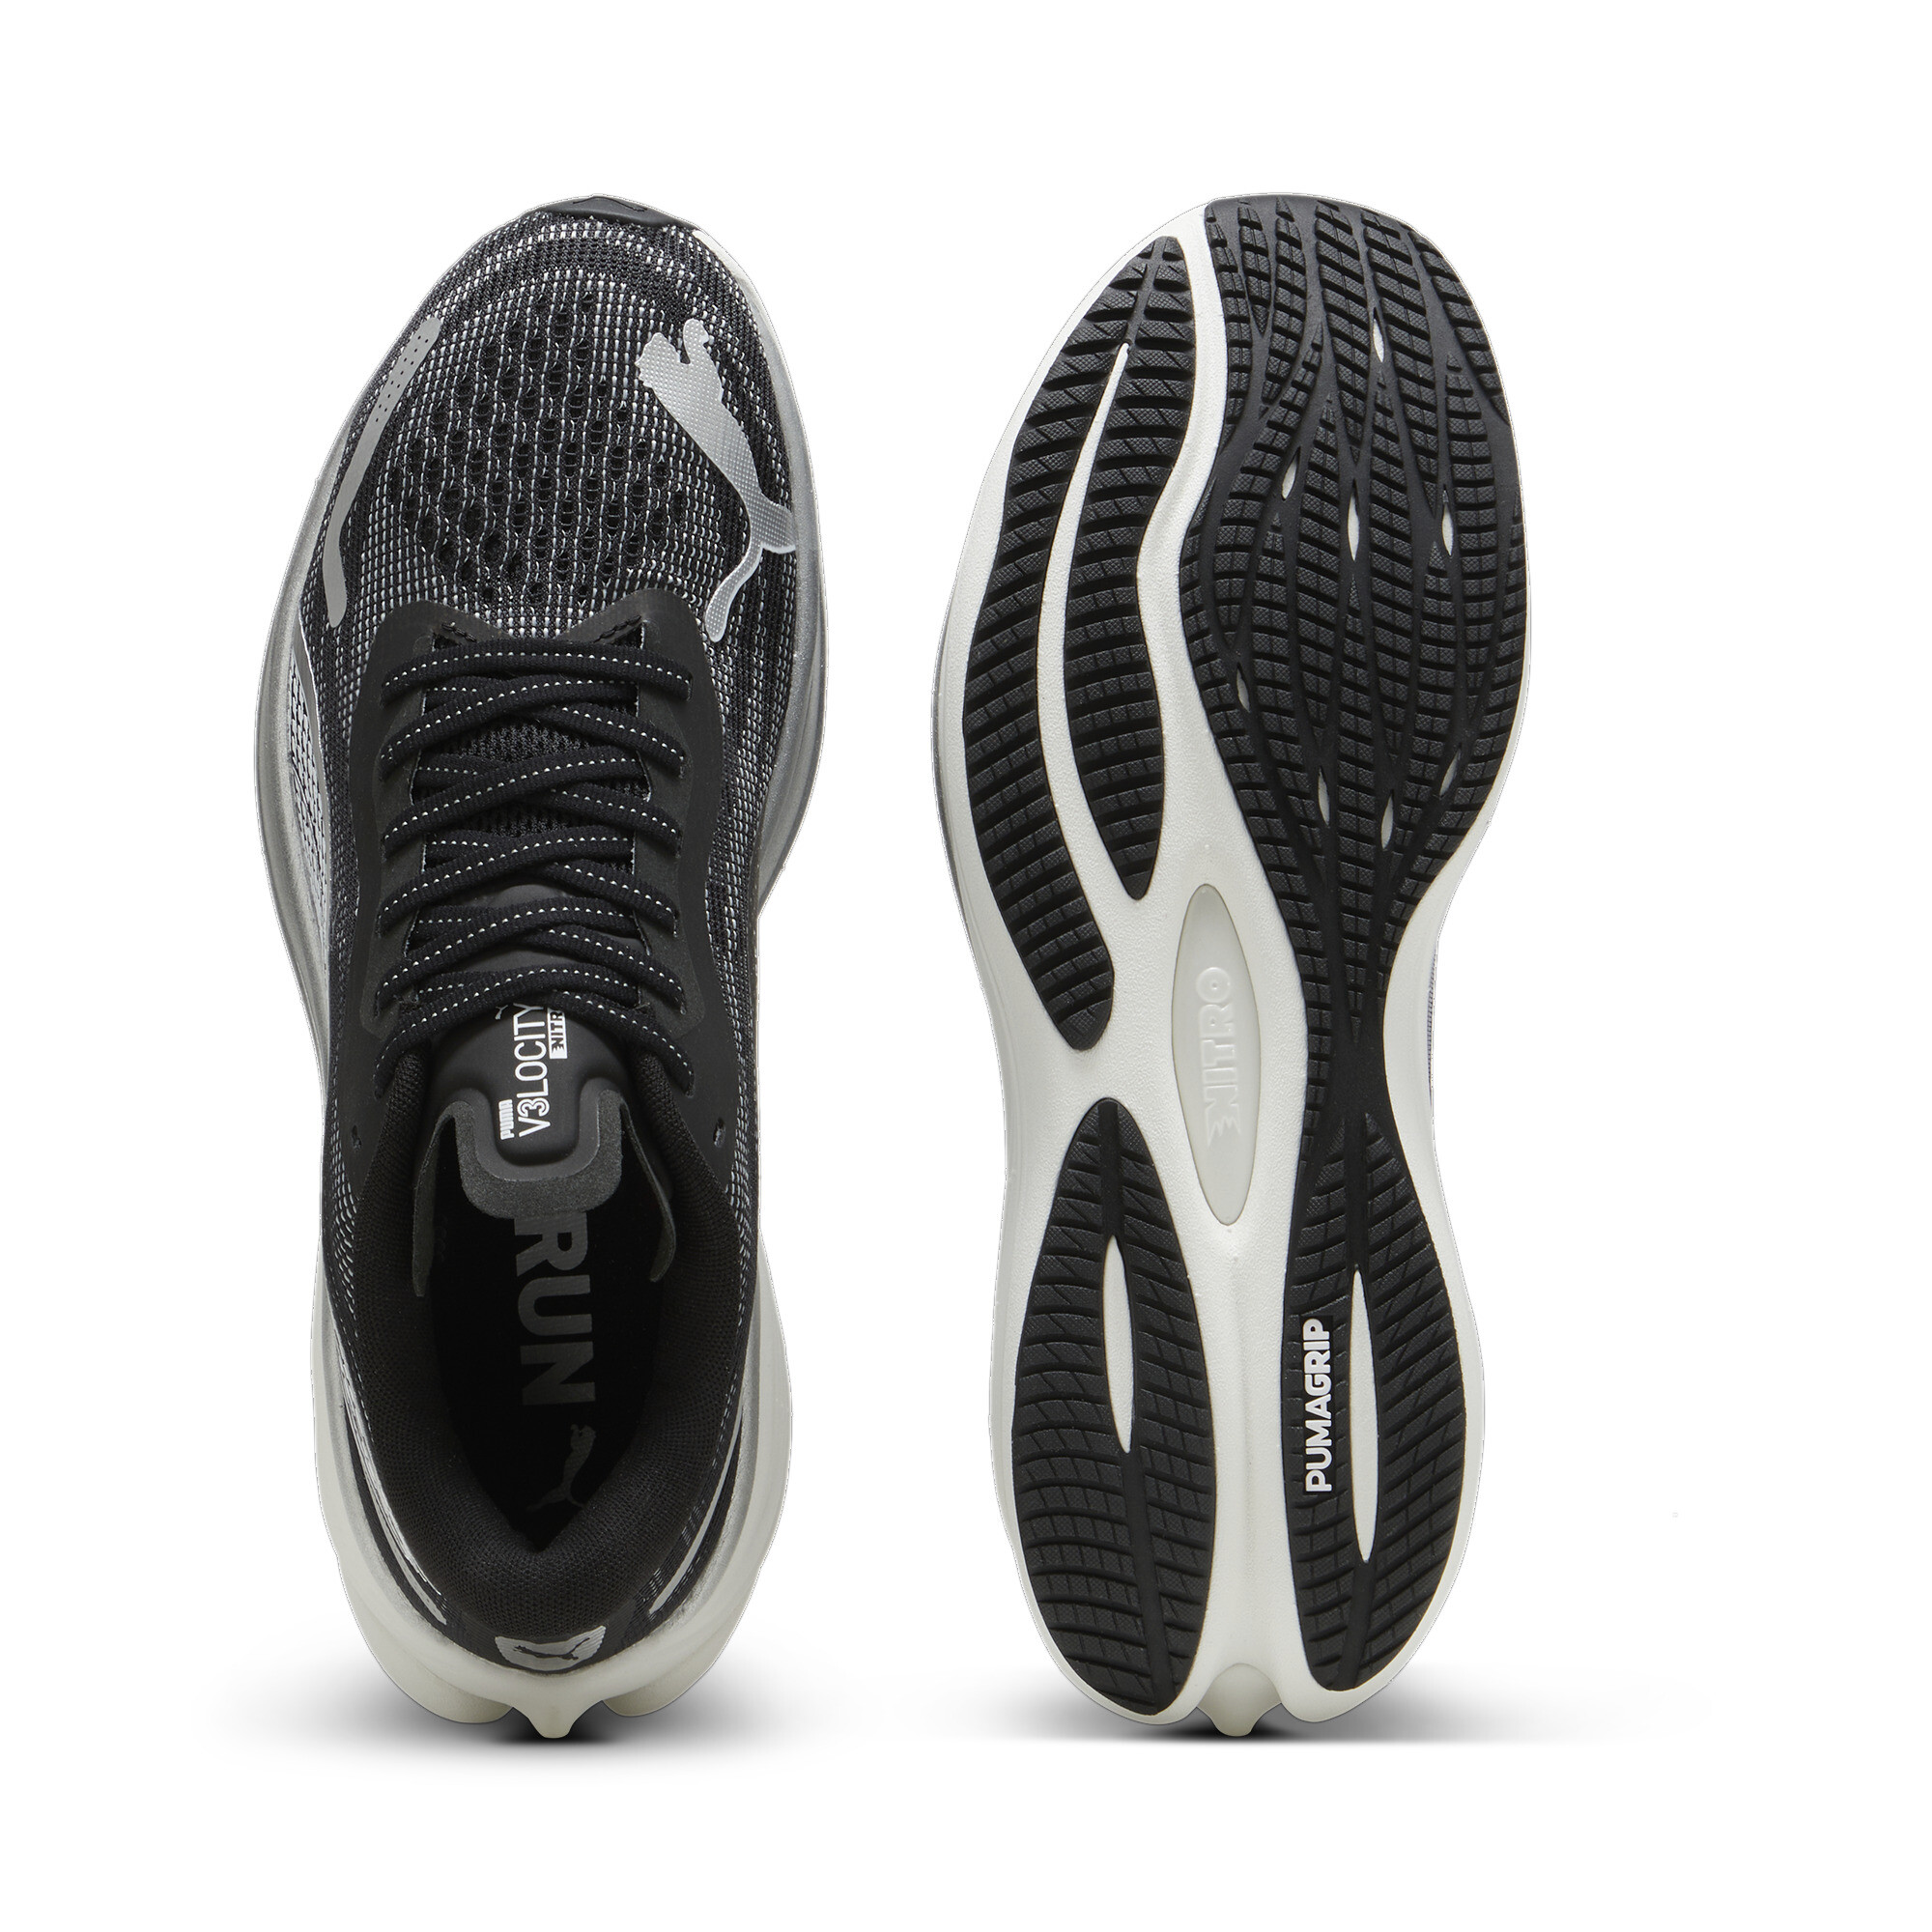 Men's PUMA Velocity NITROâ¢ 3 Running Shoes In White/Silver, Size EU 45